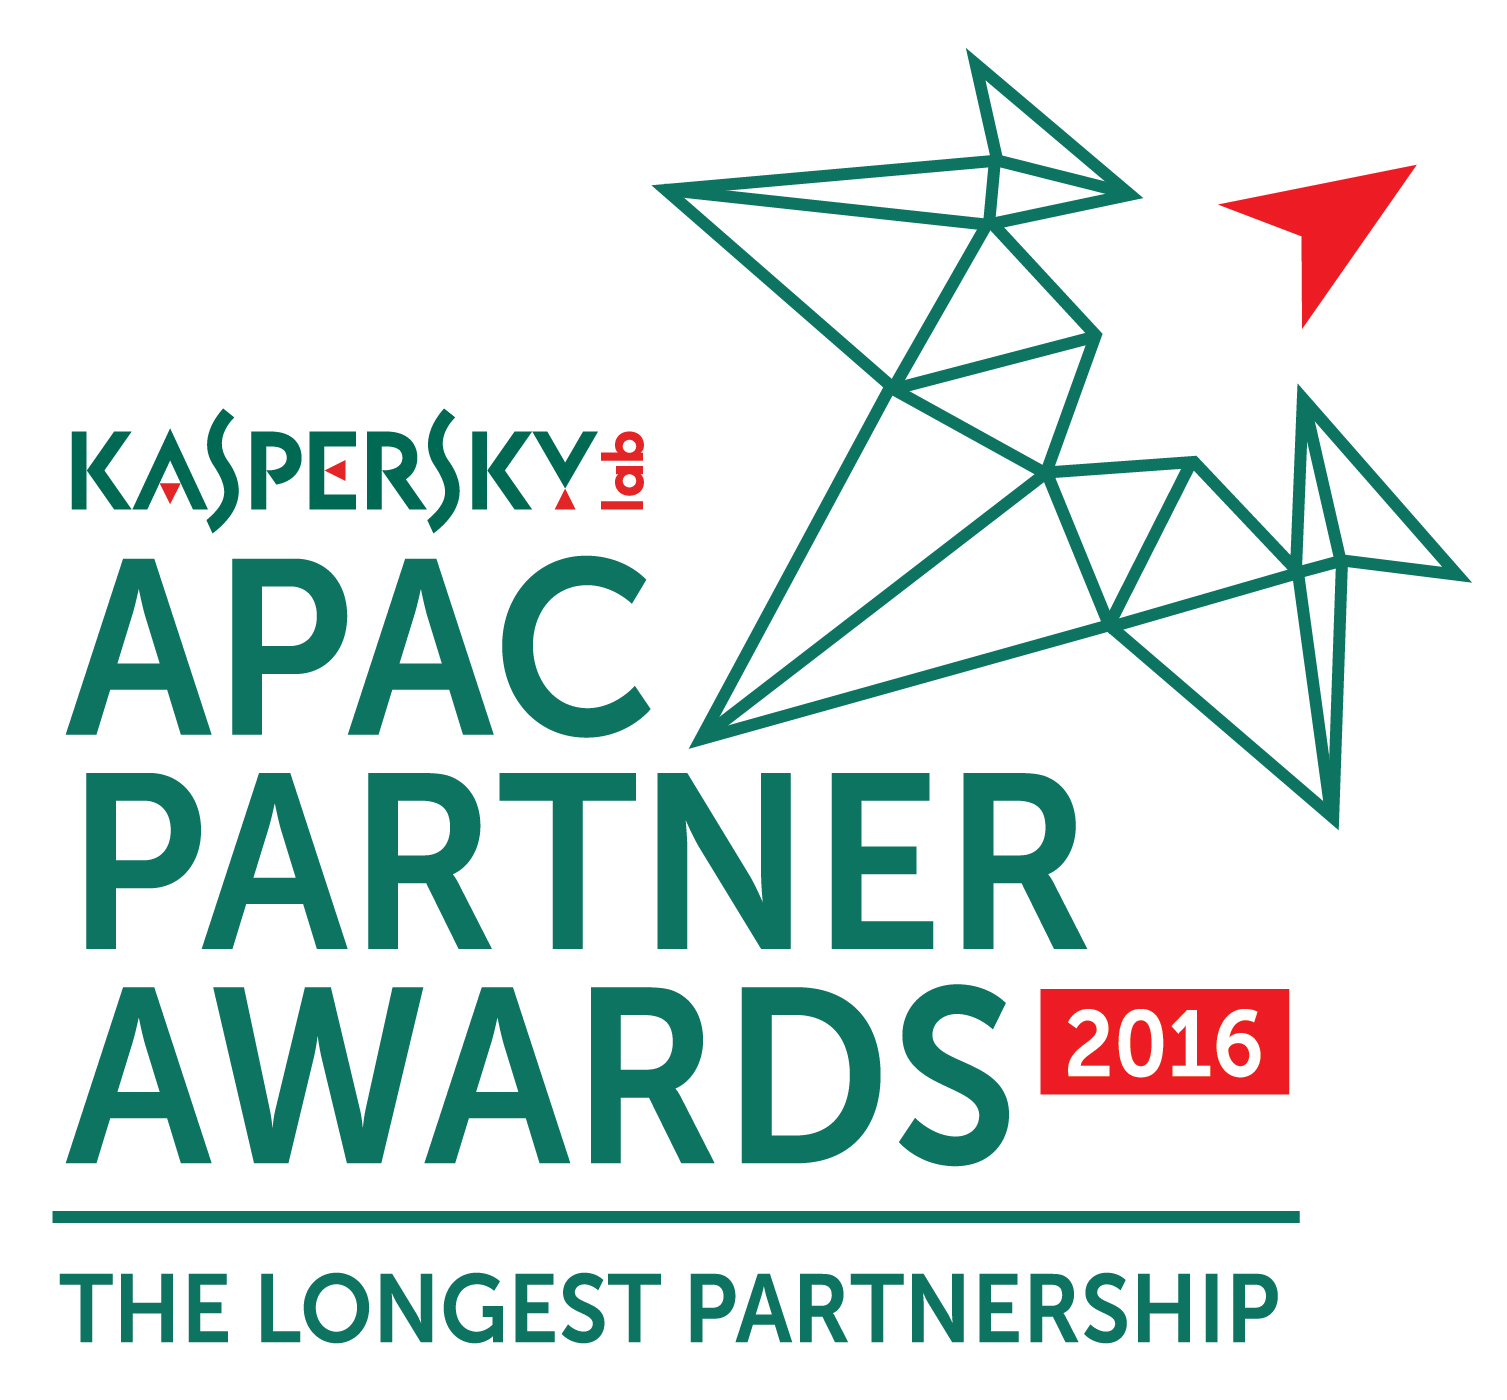 Kaspersky Award Logo - Longest Partnership